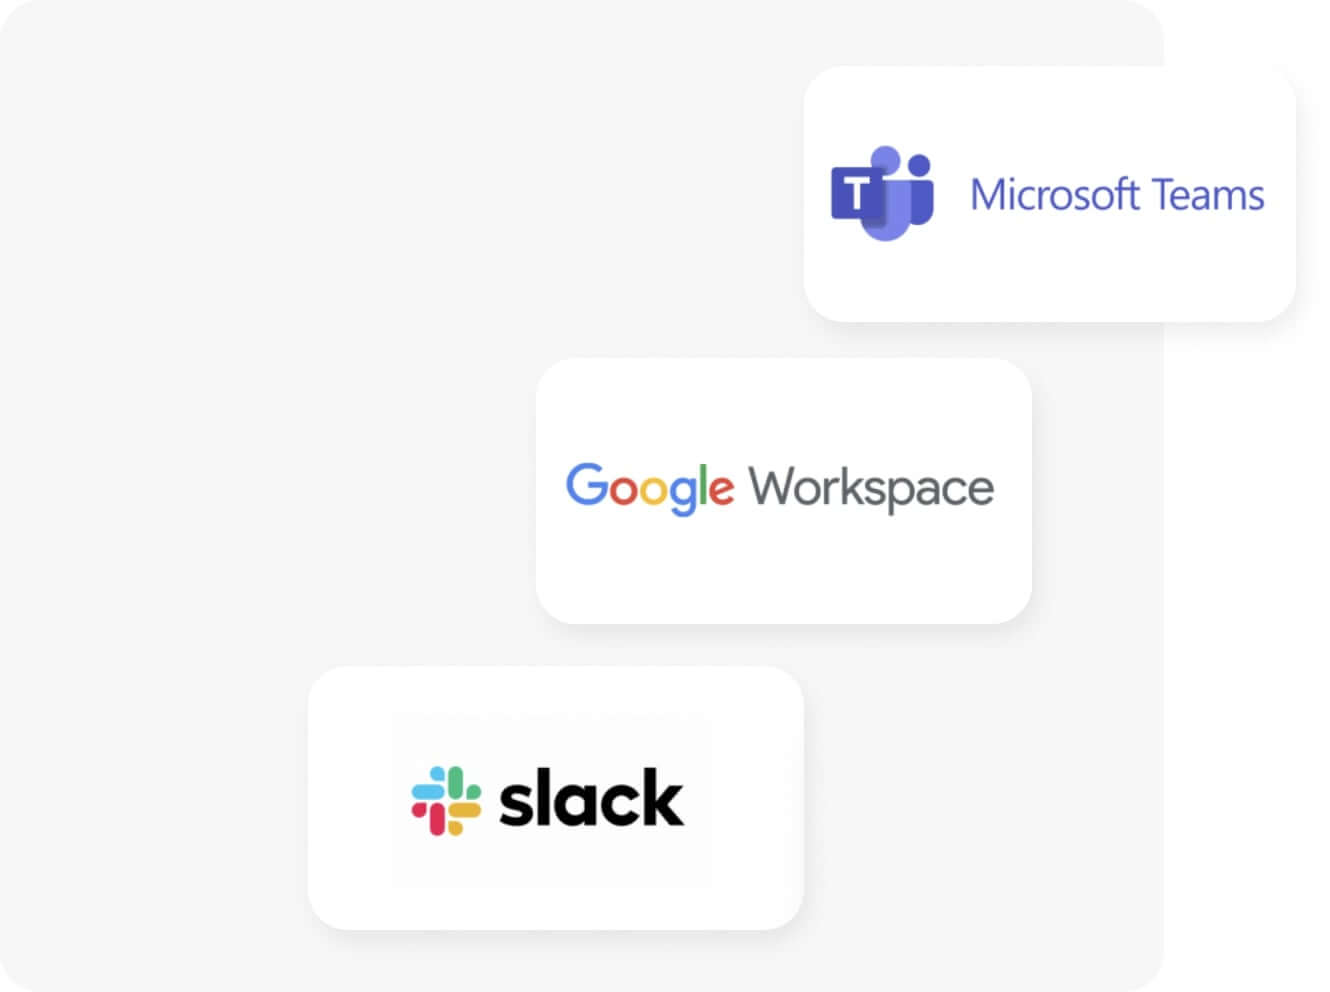 Slack, Microsoft Teams, Google Workspace, or email?